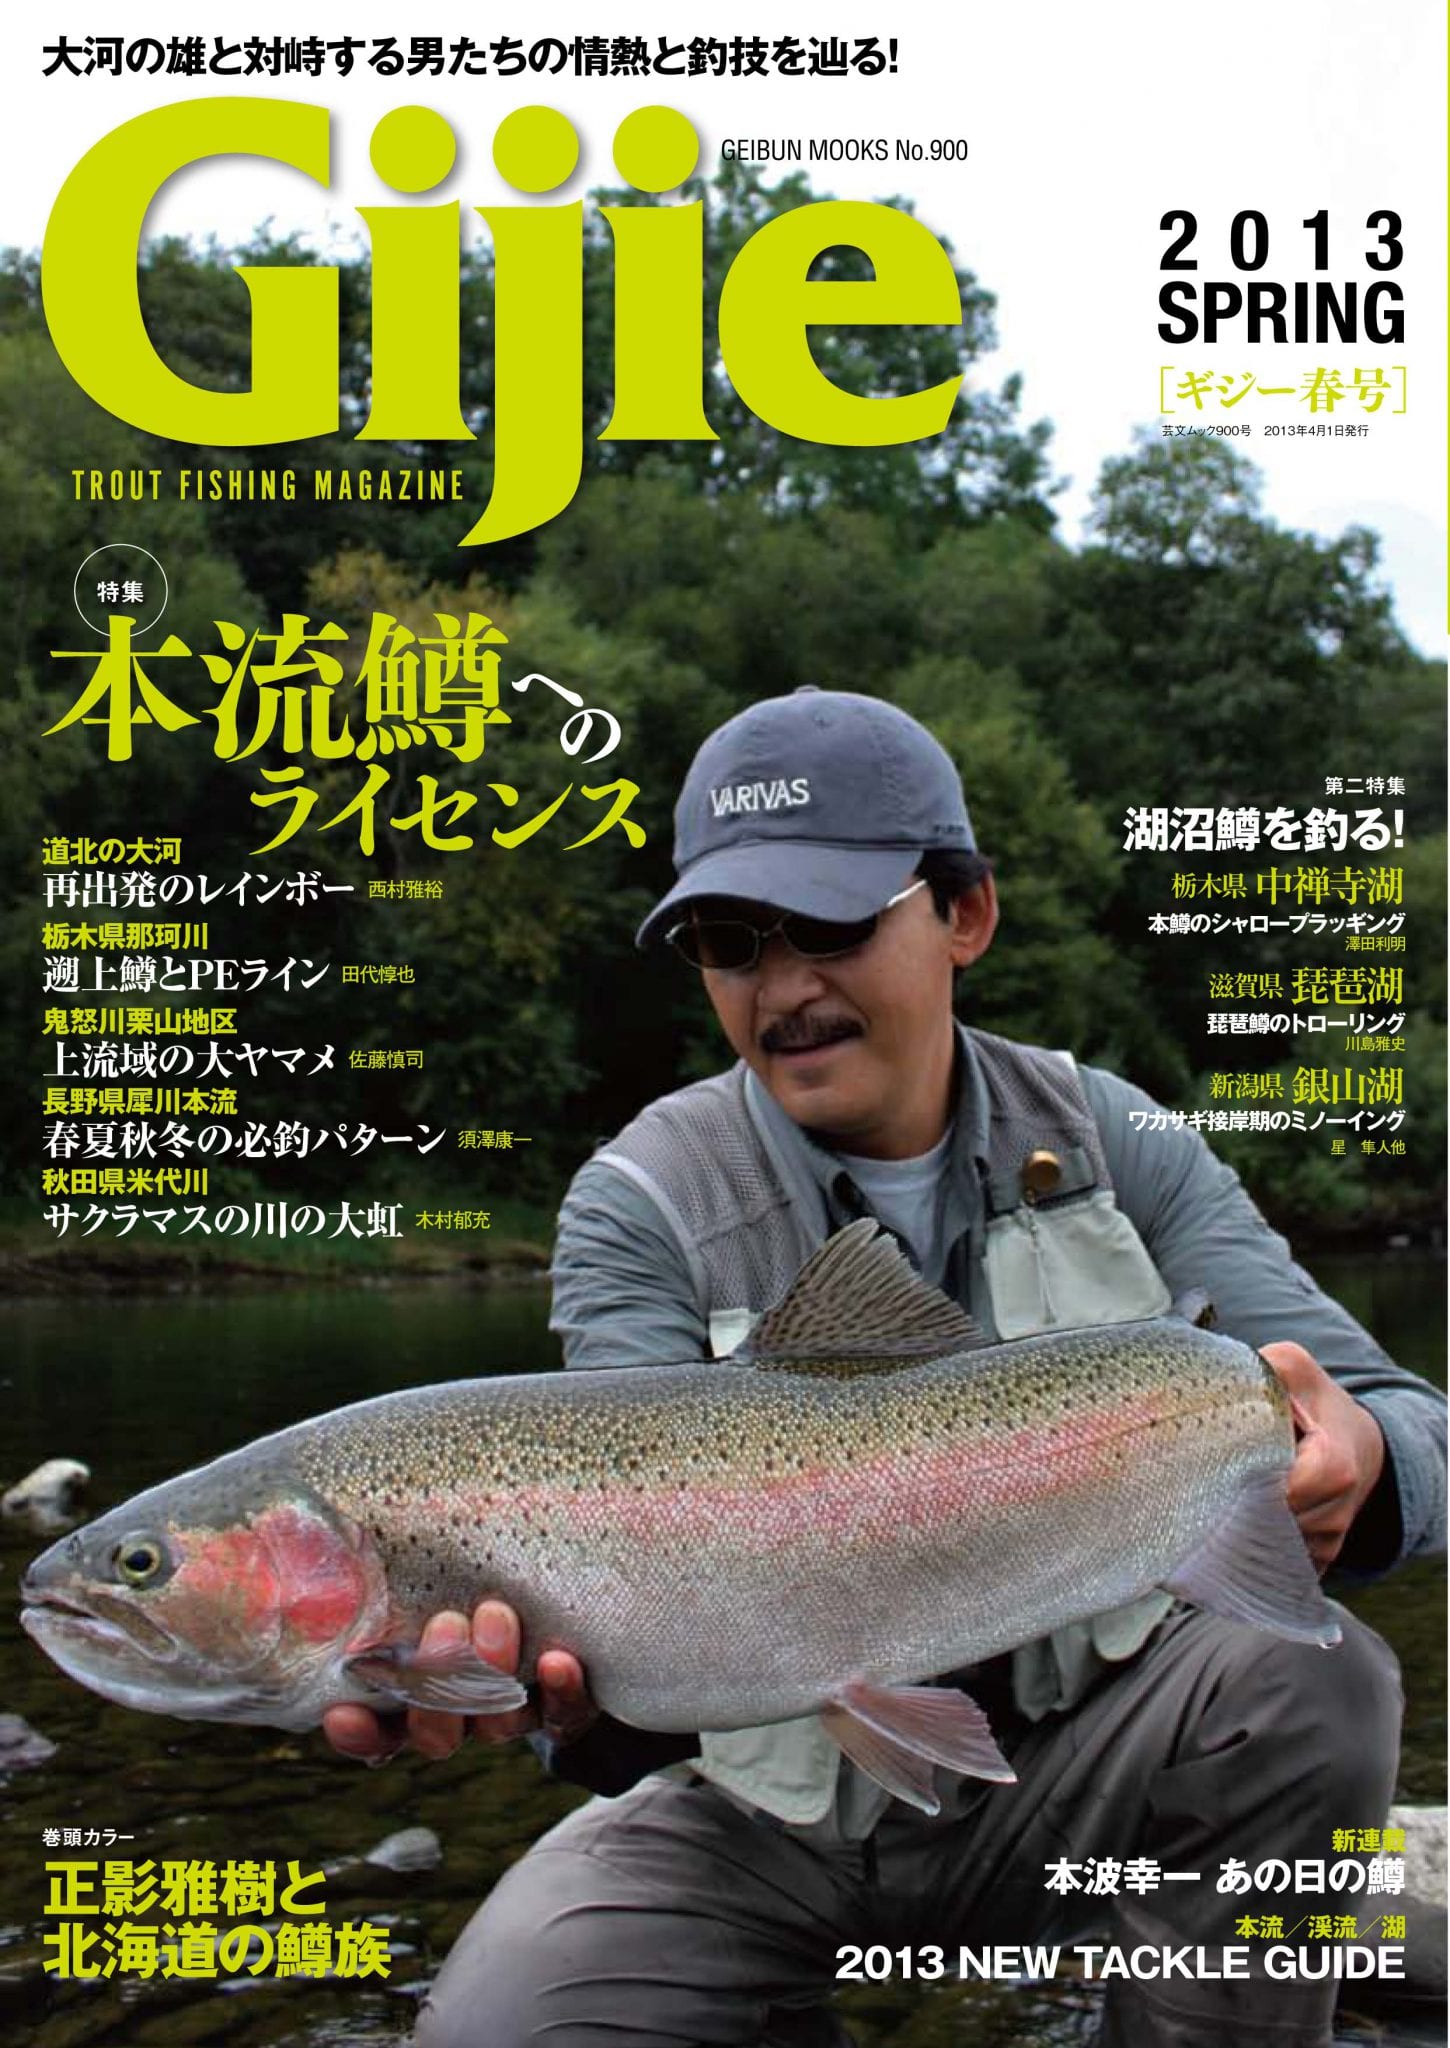 Gijie 2013 春号 | 芸文社カタログサイト